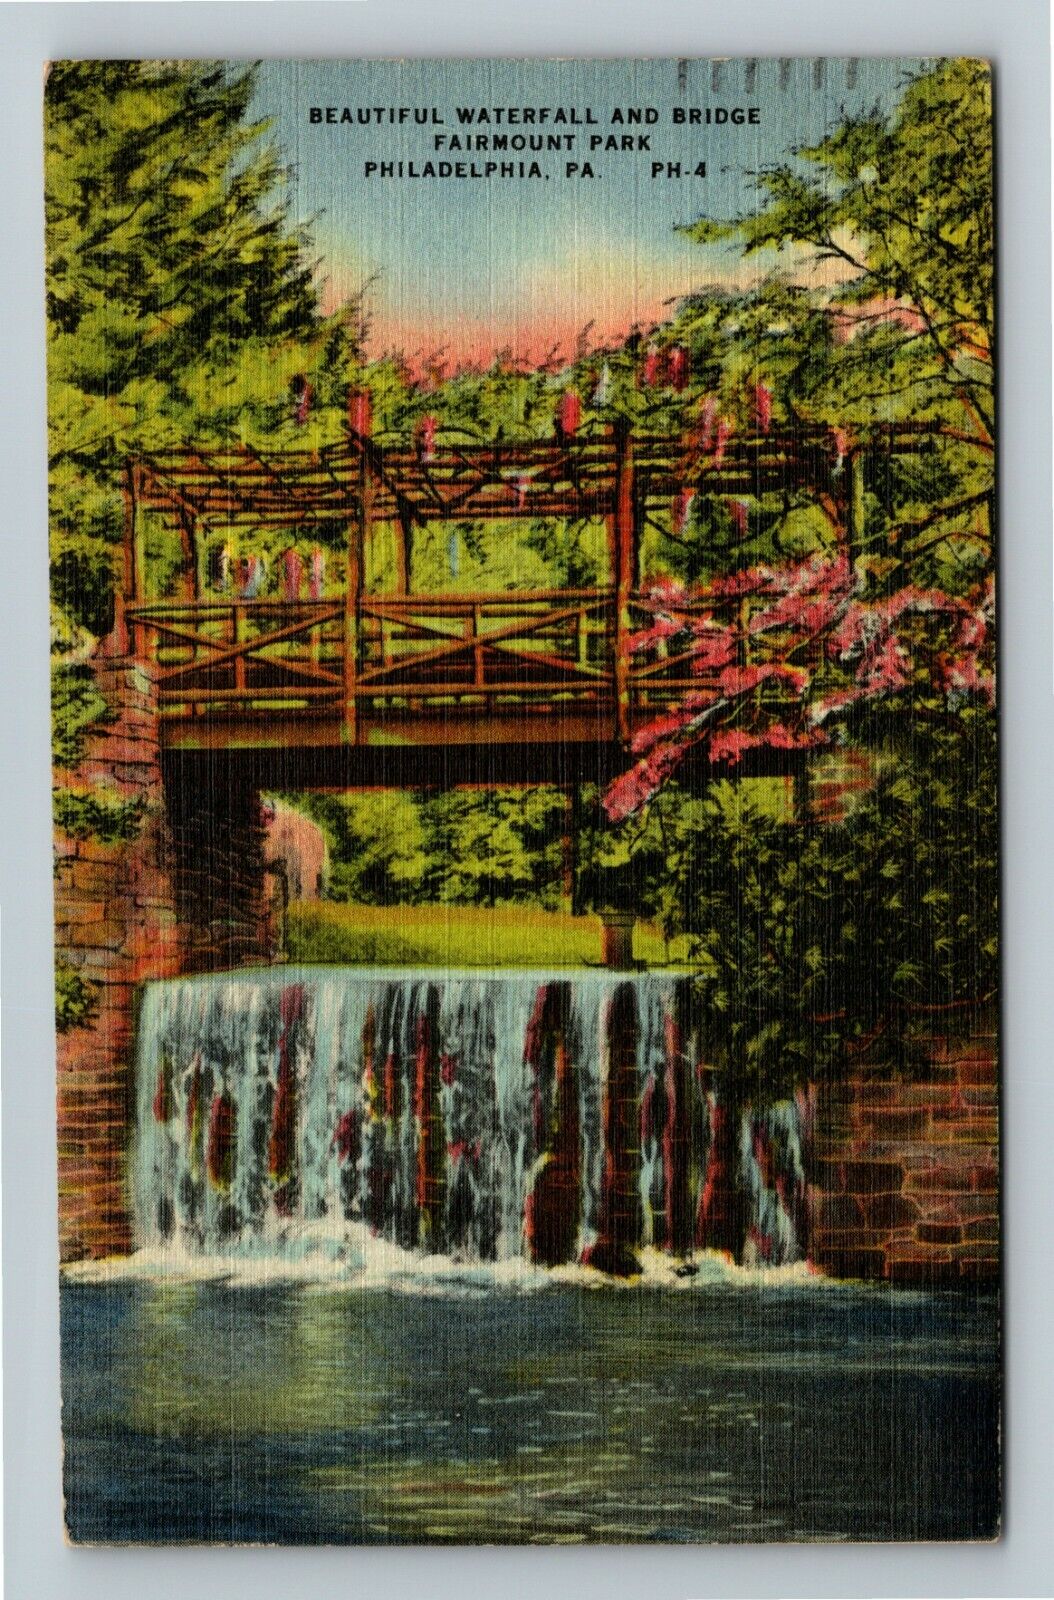 Philadelphia PA-Pennsylvania Scenic Waterfall and Bridge c1944 Vintage Postcard